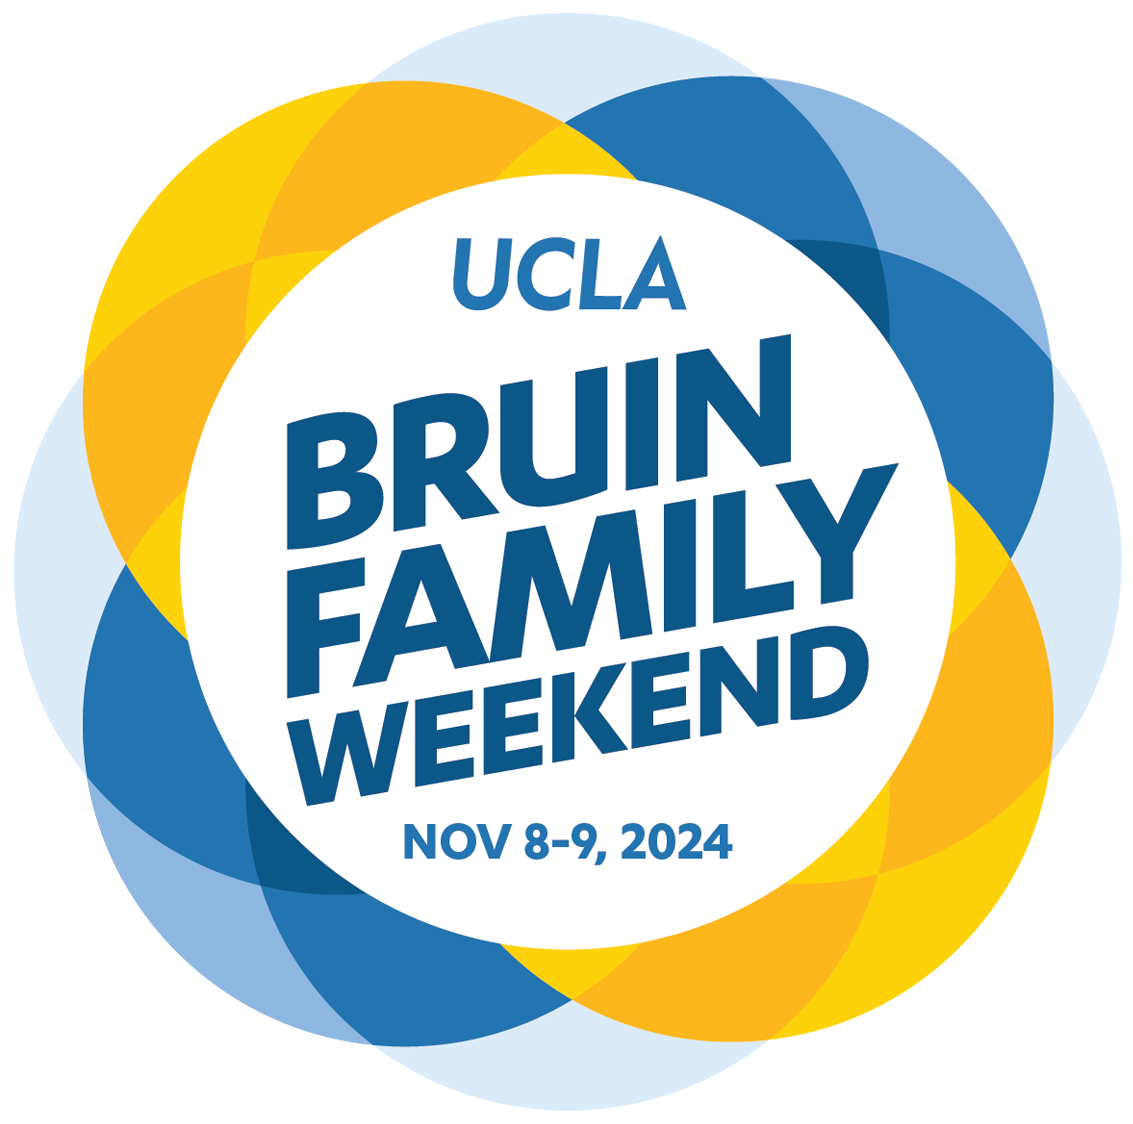 UCLA Bruin Family Weekend